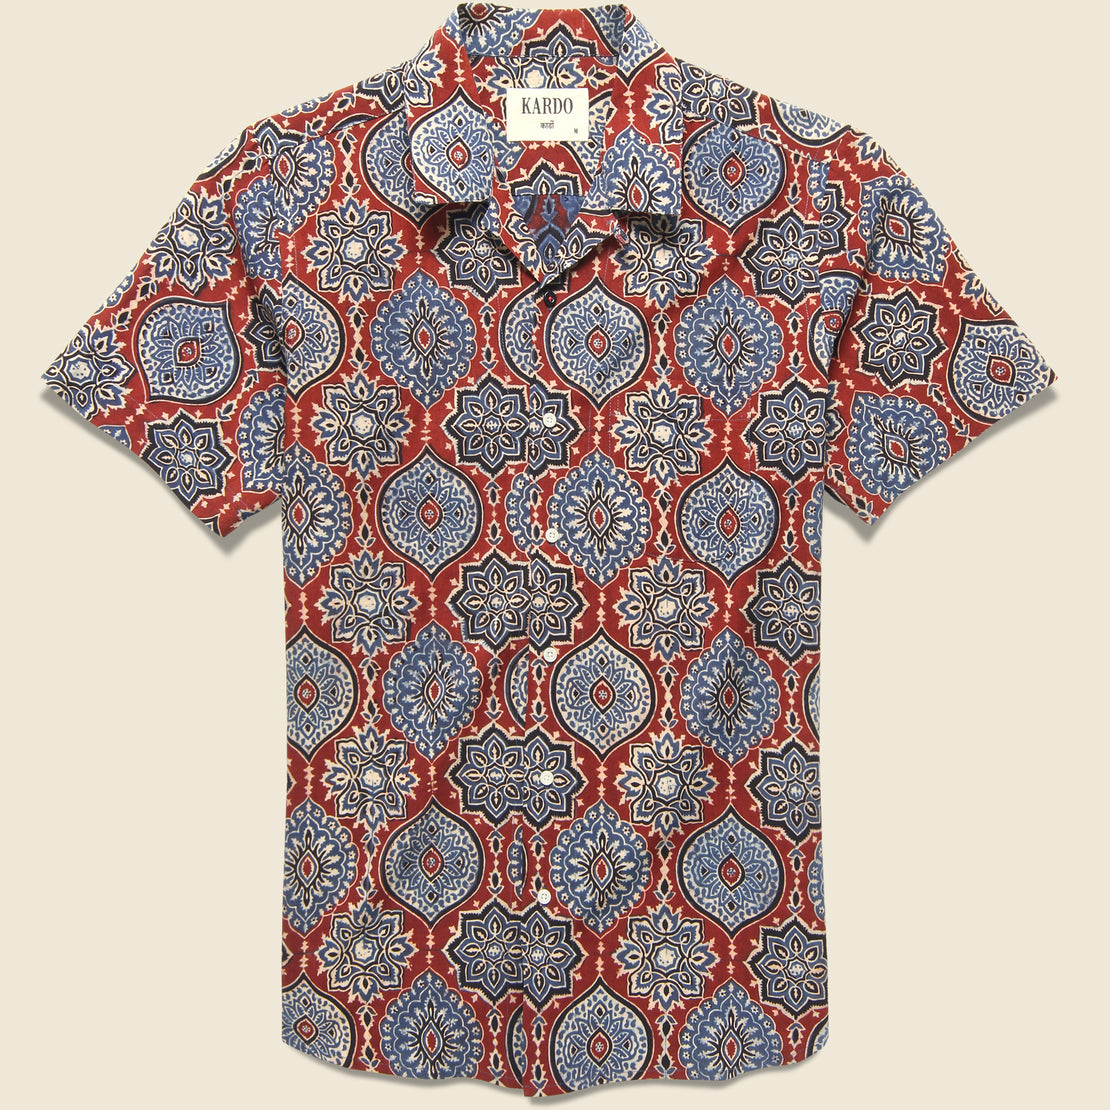 Kardo Lamar Block Print Tile Shirt - Red/Blue